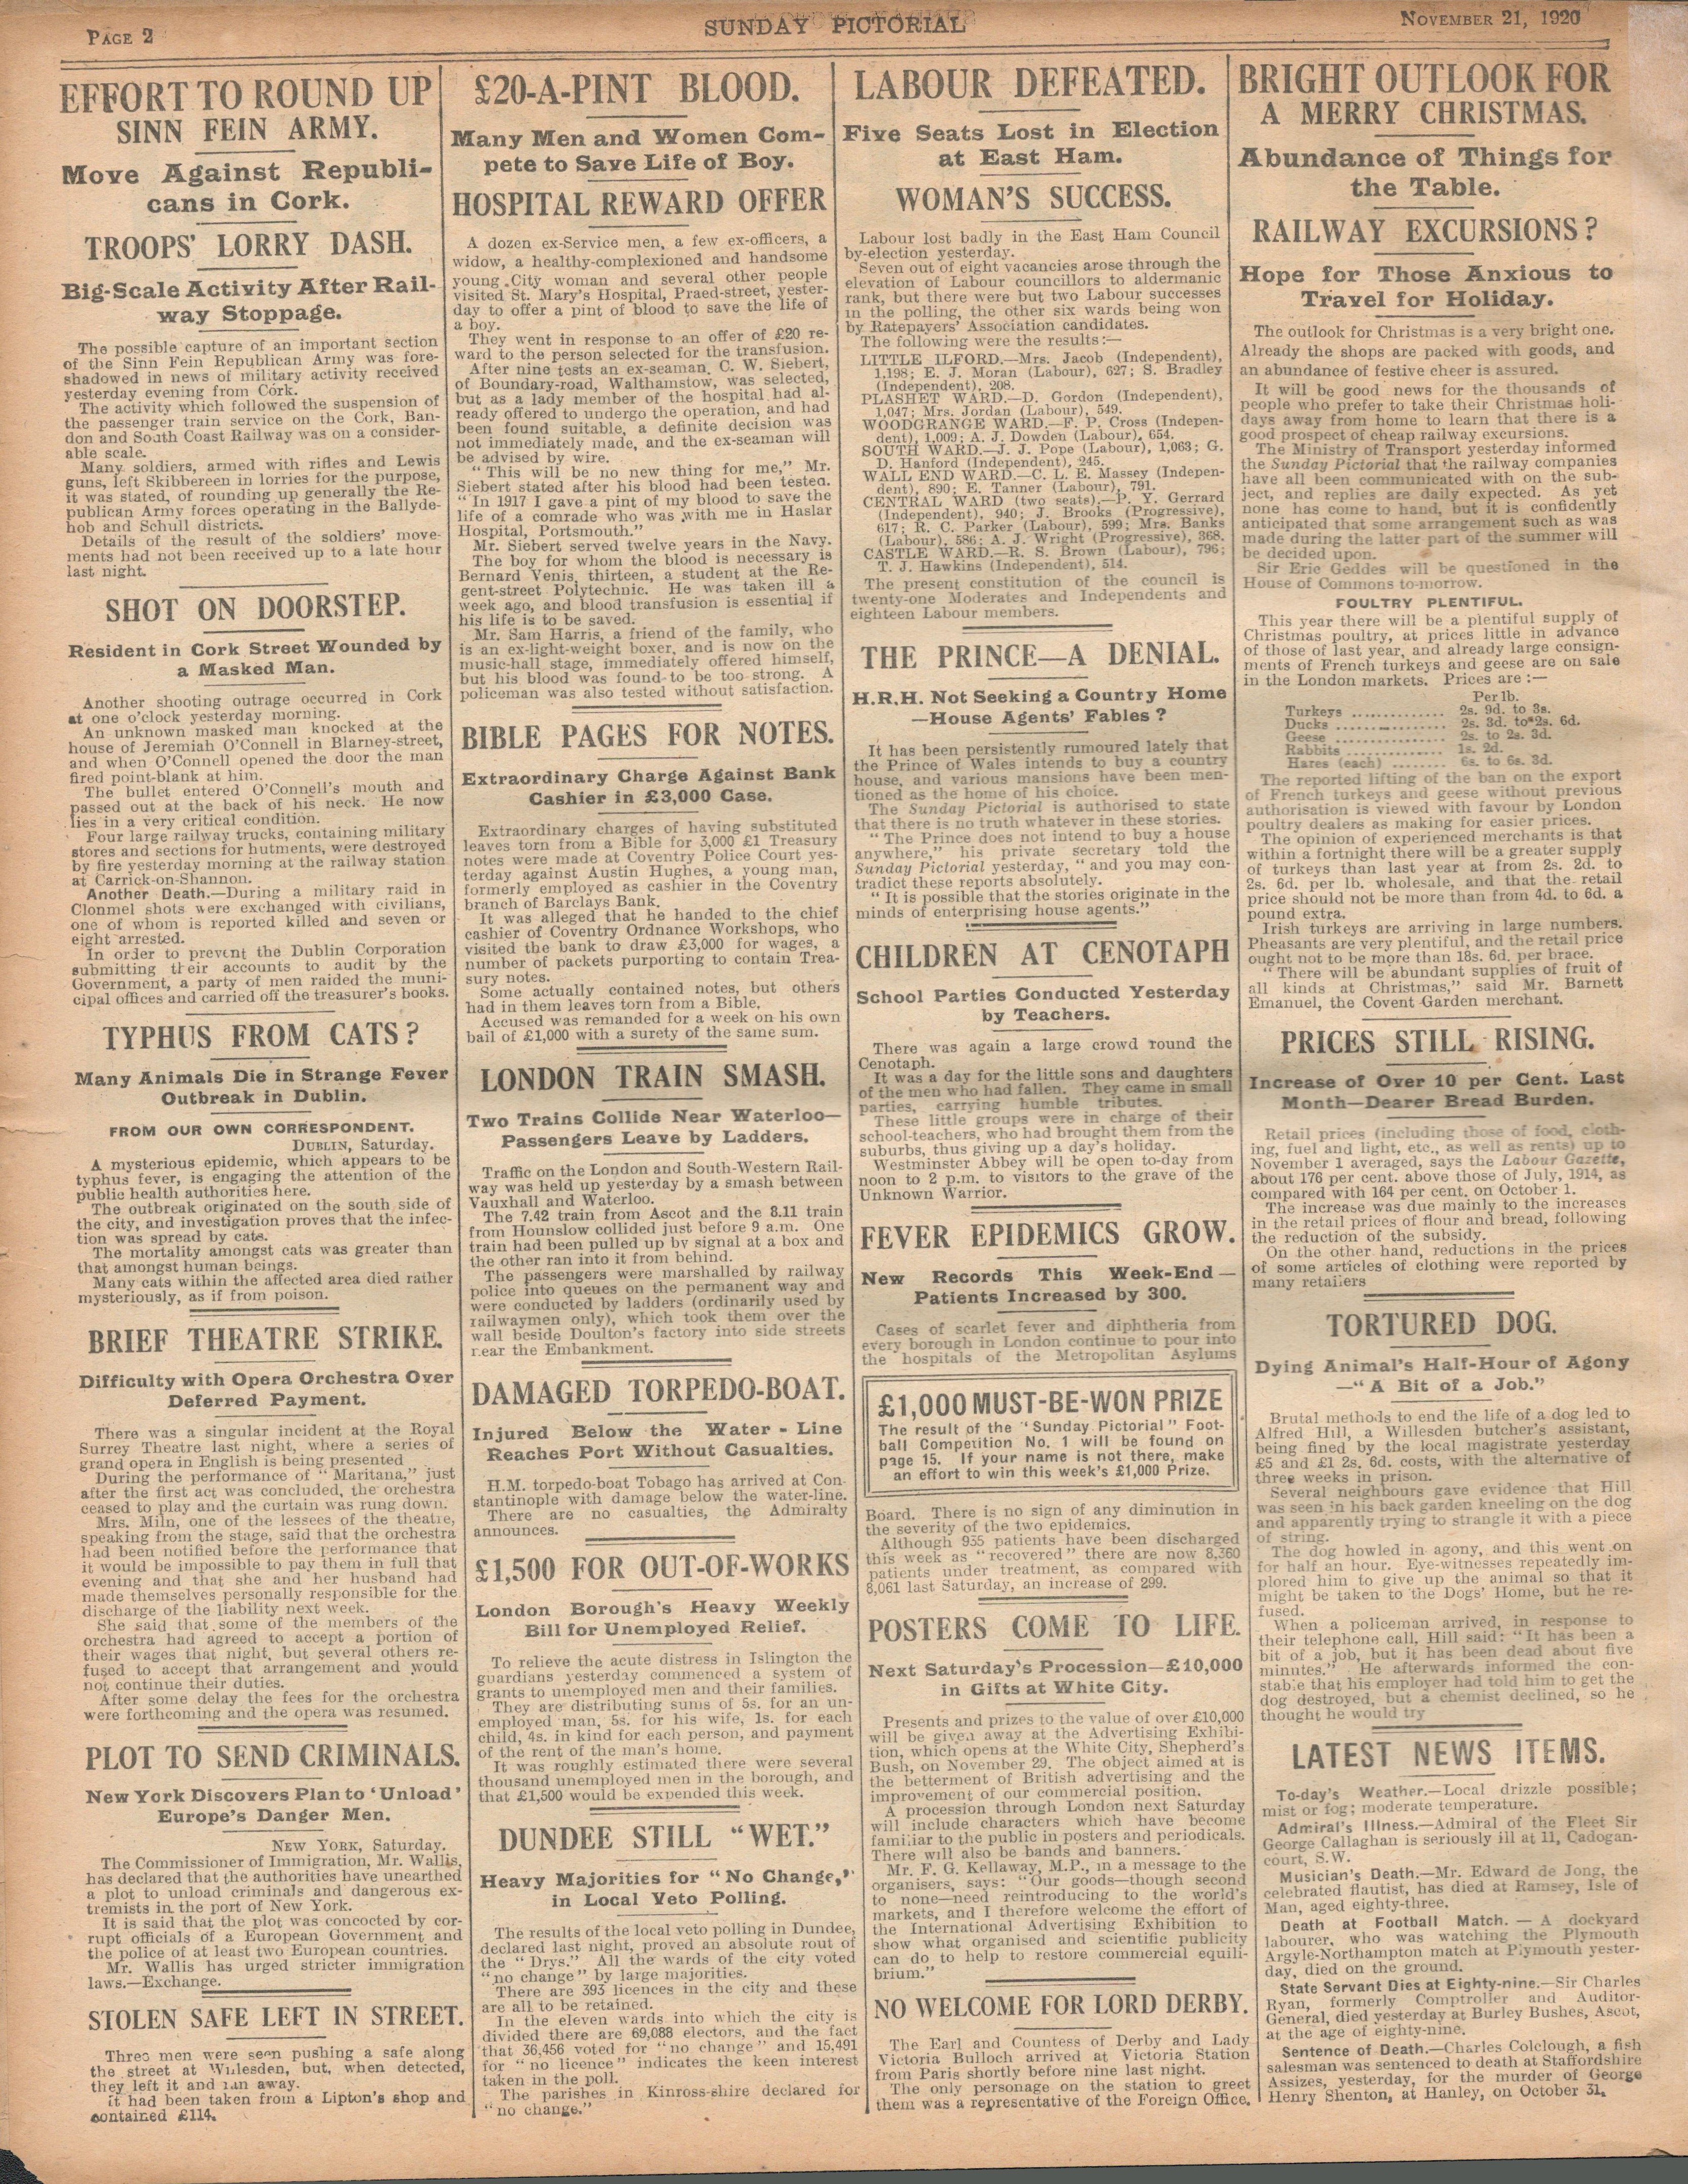 Battle of Tralee Irish War of Independence Sinn Fein Fake News Story 1920 - Image 6 of 6